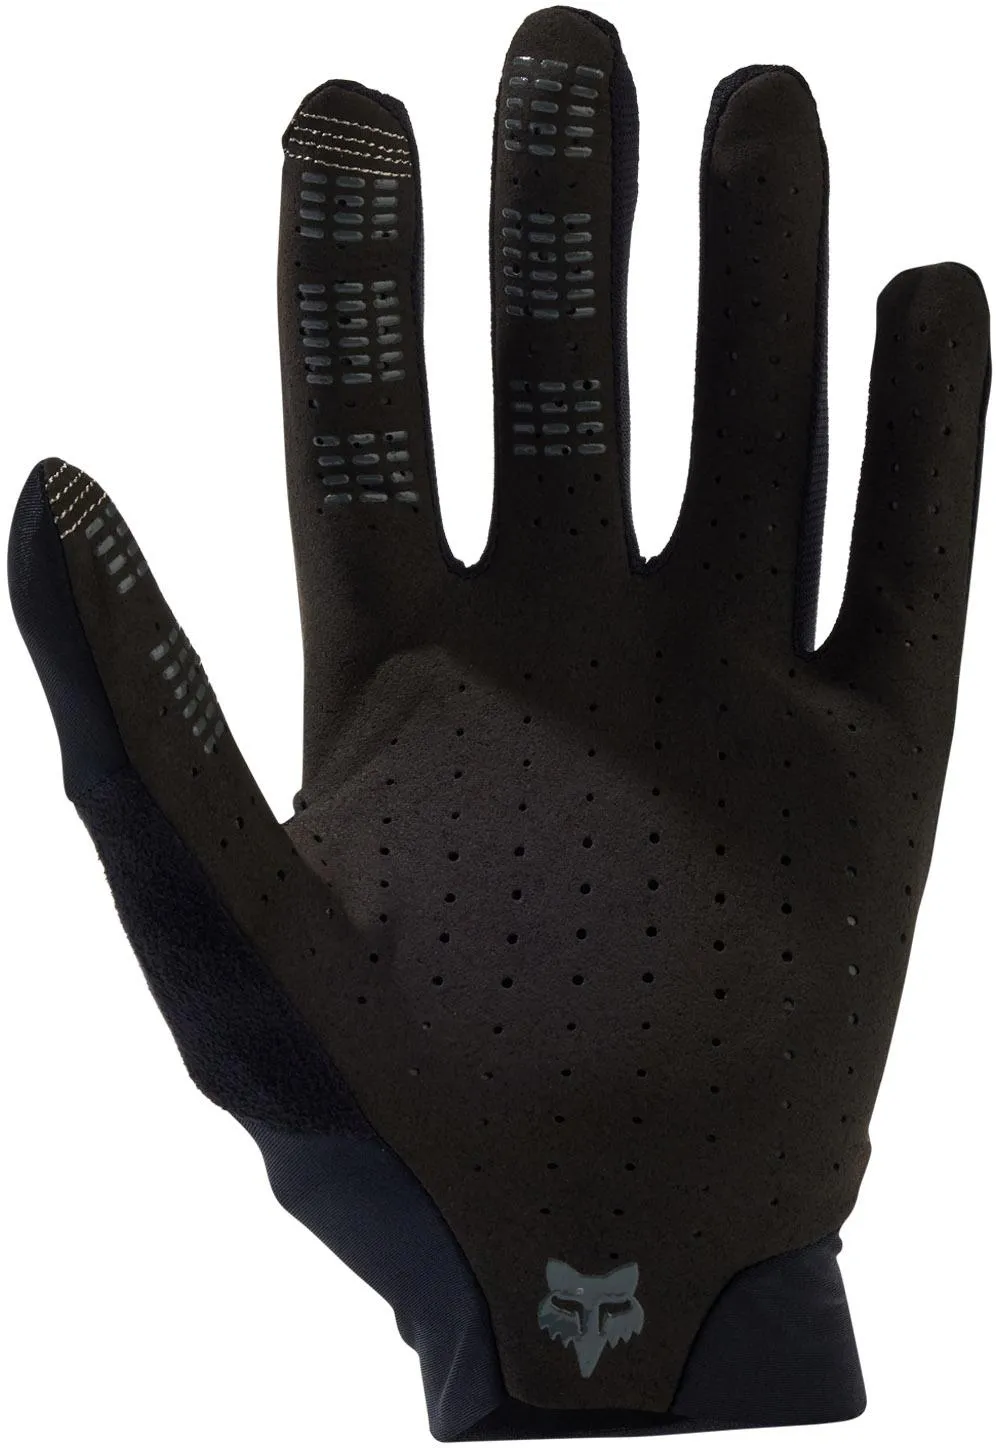  Flexair Cycling Gloves, Black